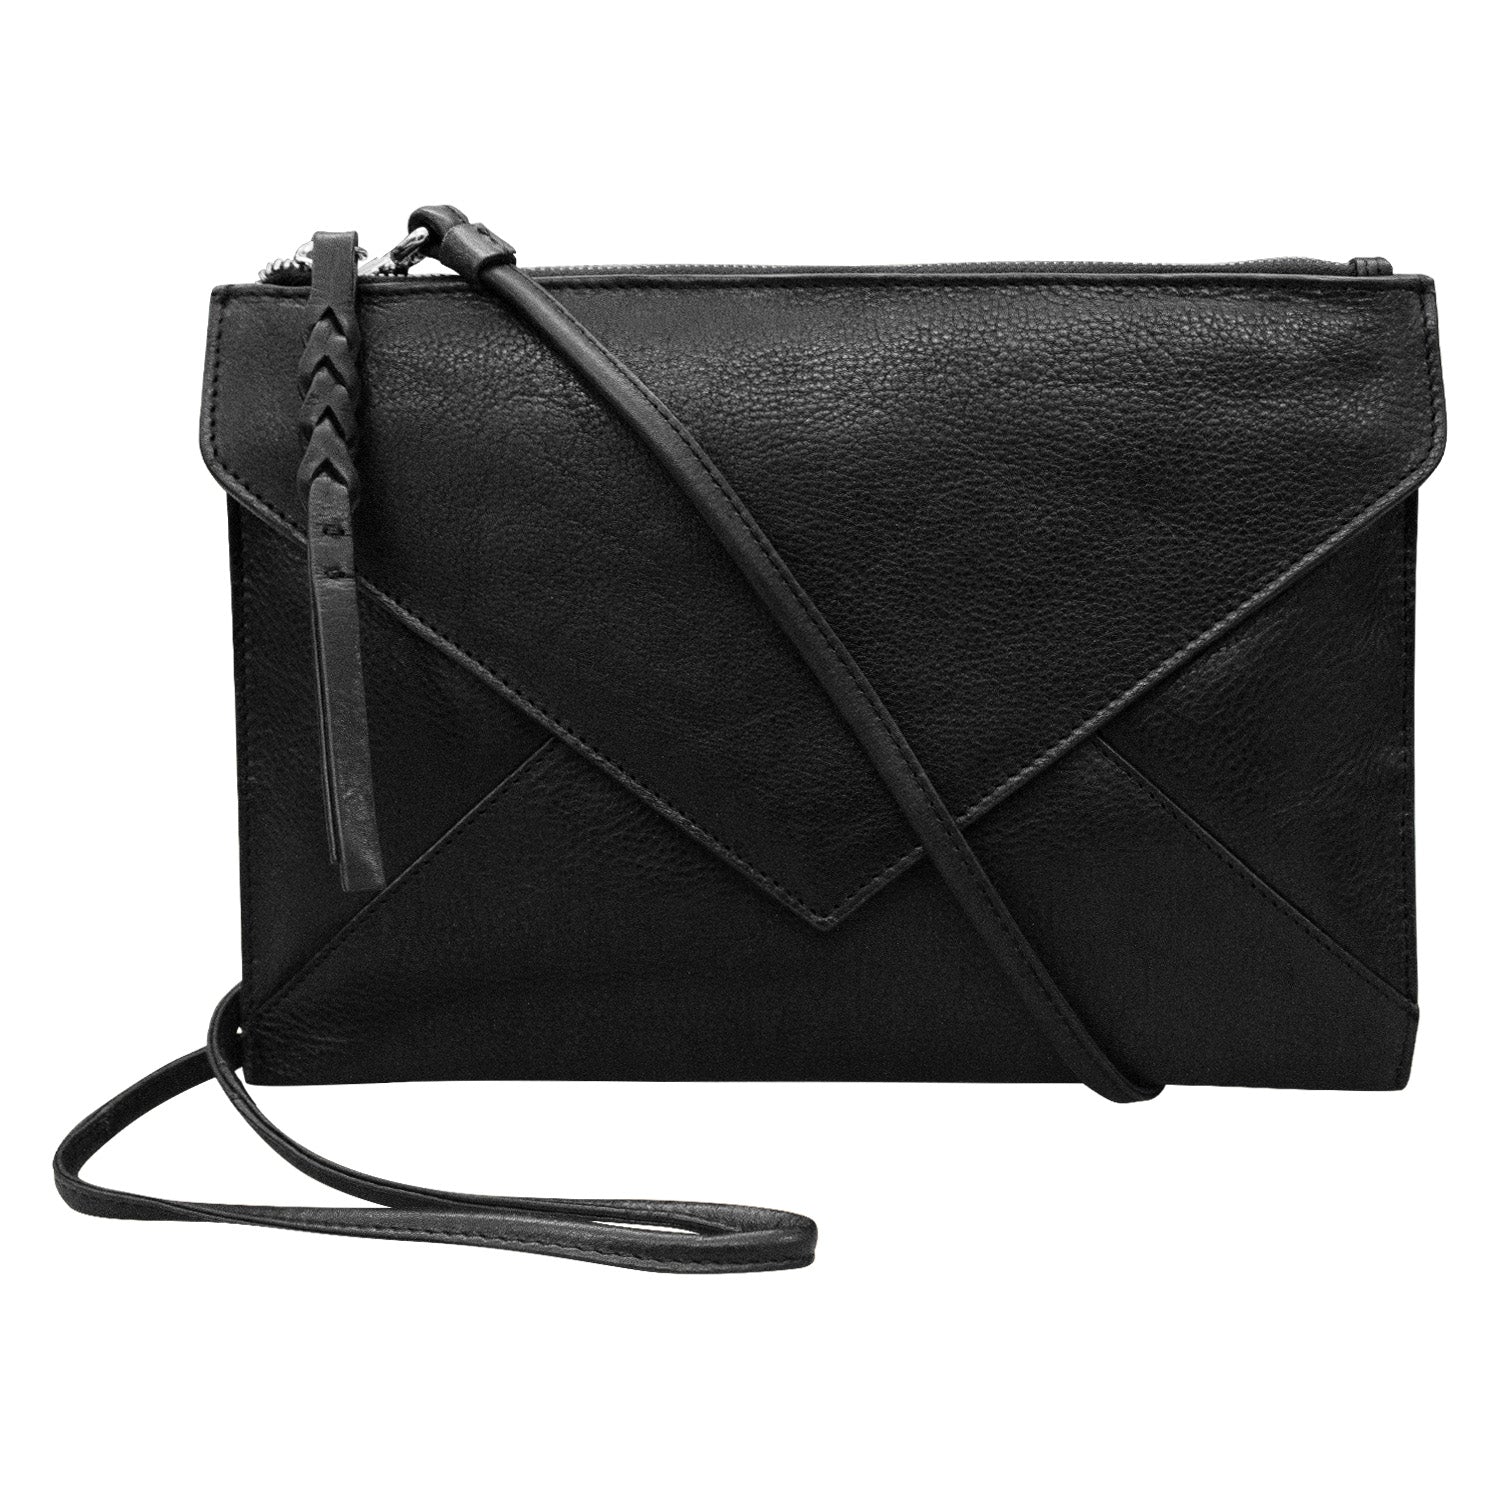 FashionPuzzle Envelope Wristlet Clutch Crossbody Bag with Chain Strap